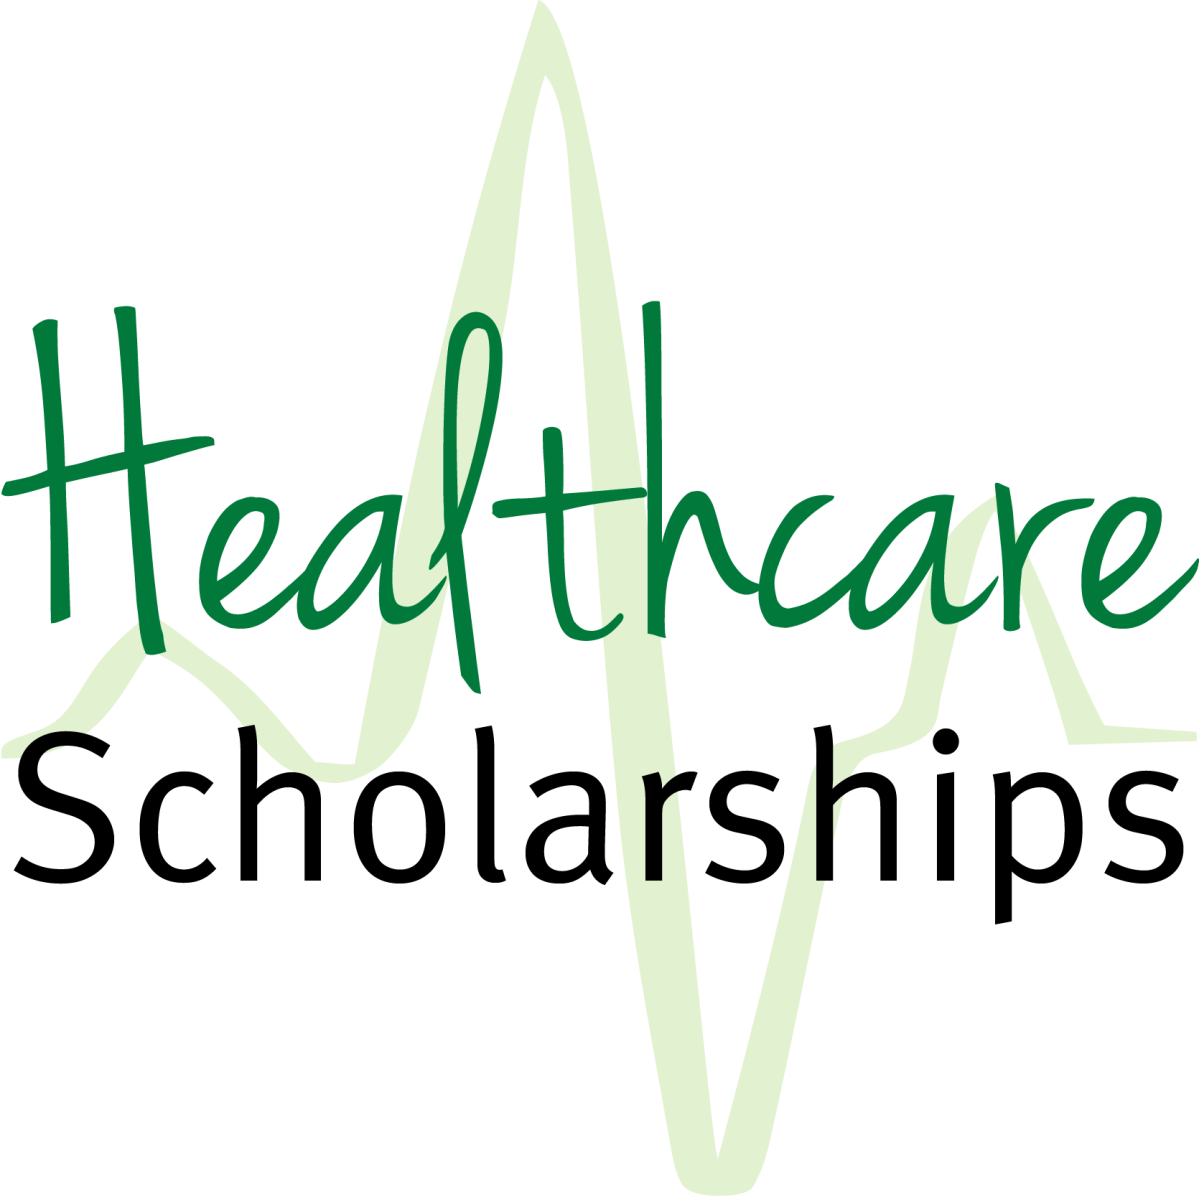 Healthcare Scholarships